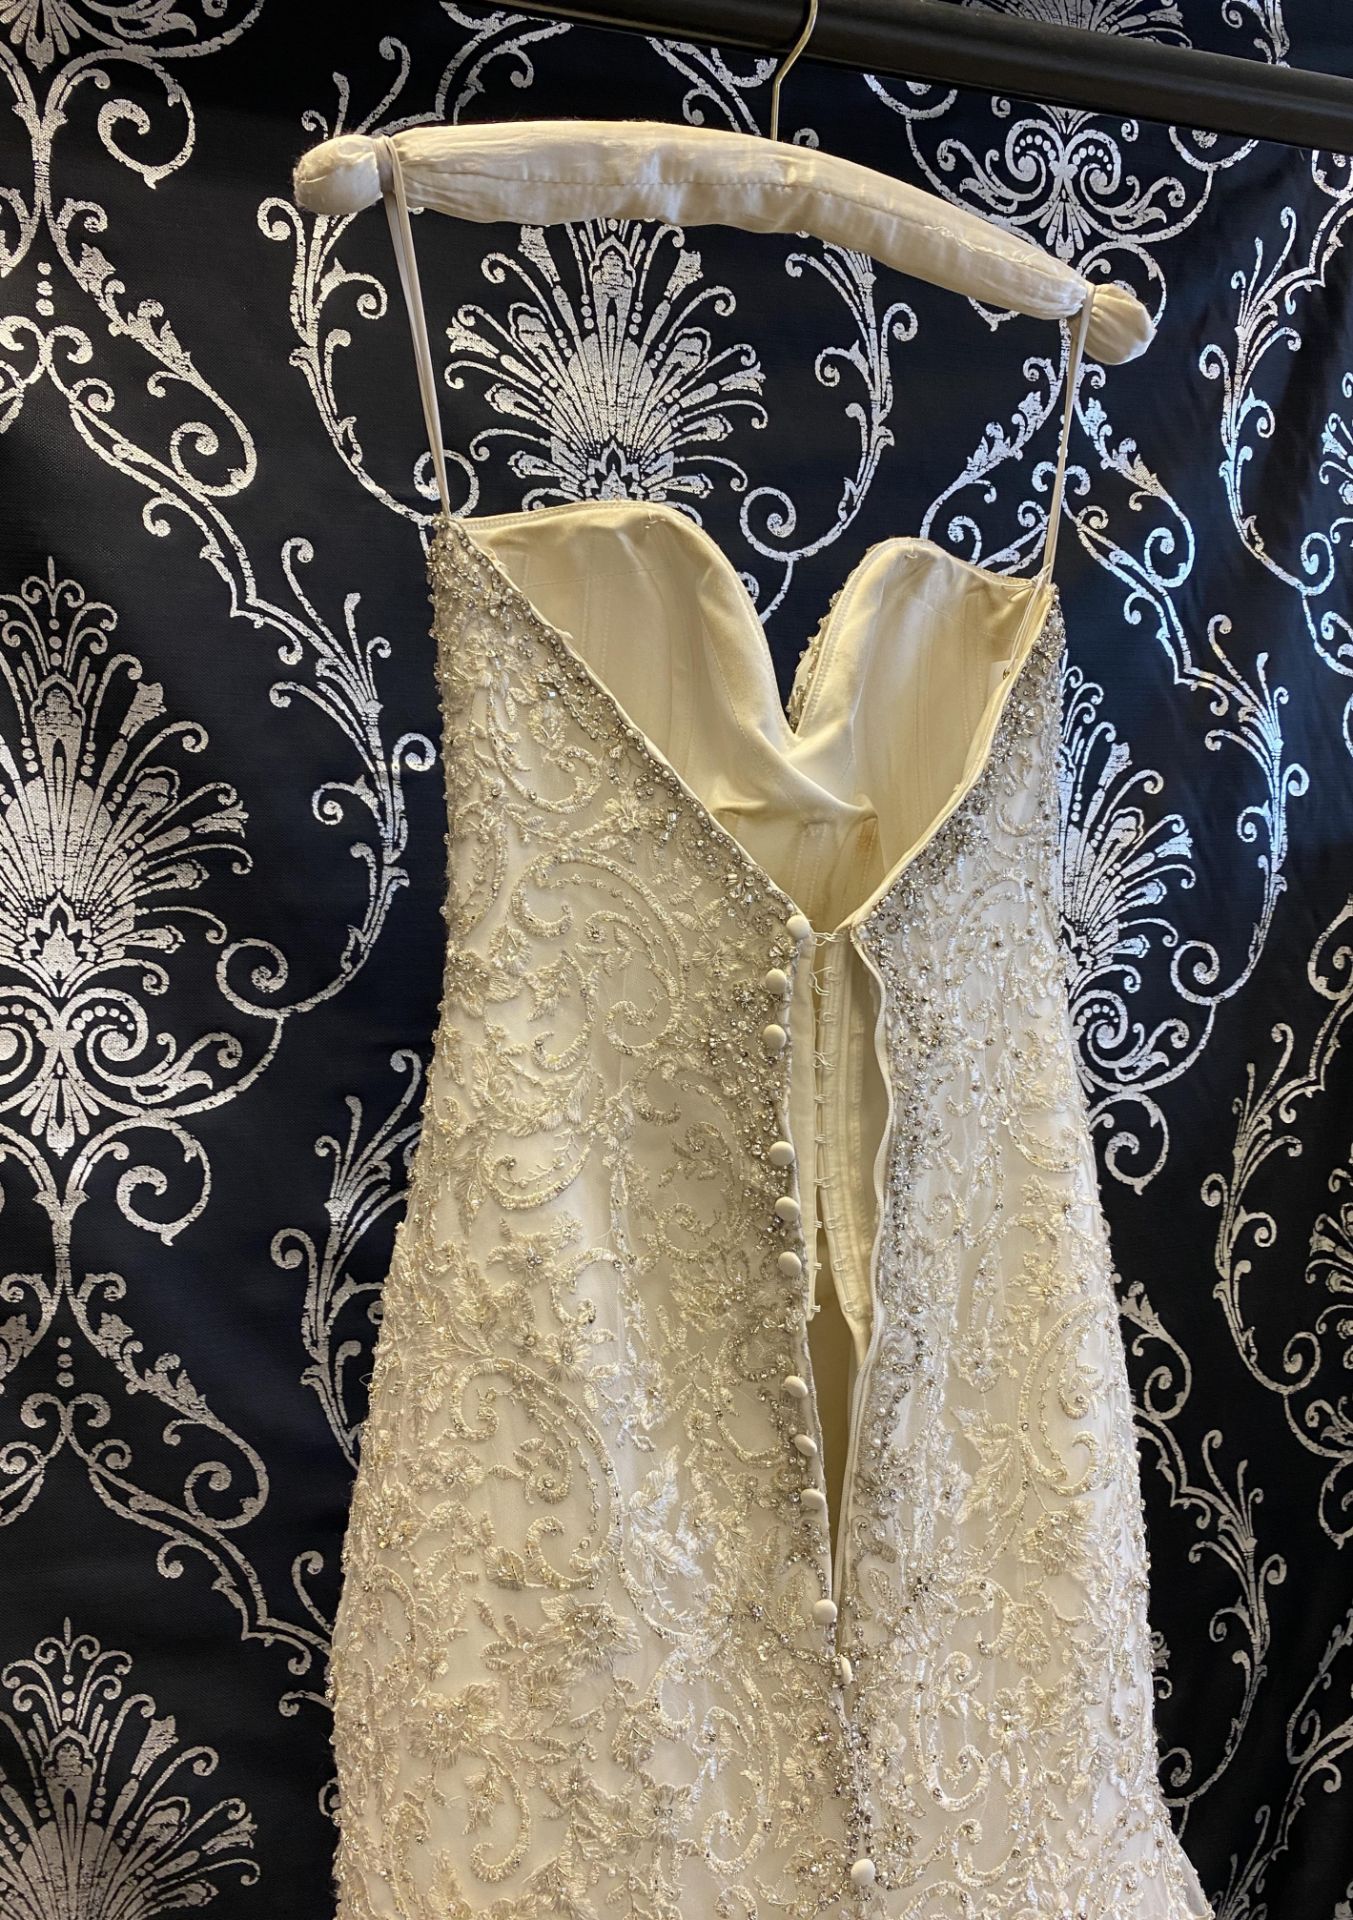 1 x ALLURE '9275' Timeless Strapless Lace And Chiffon Mermaid Designer Wedding Dress RRP £2,250 UK12 - Image 8 of 11